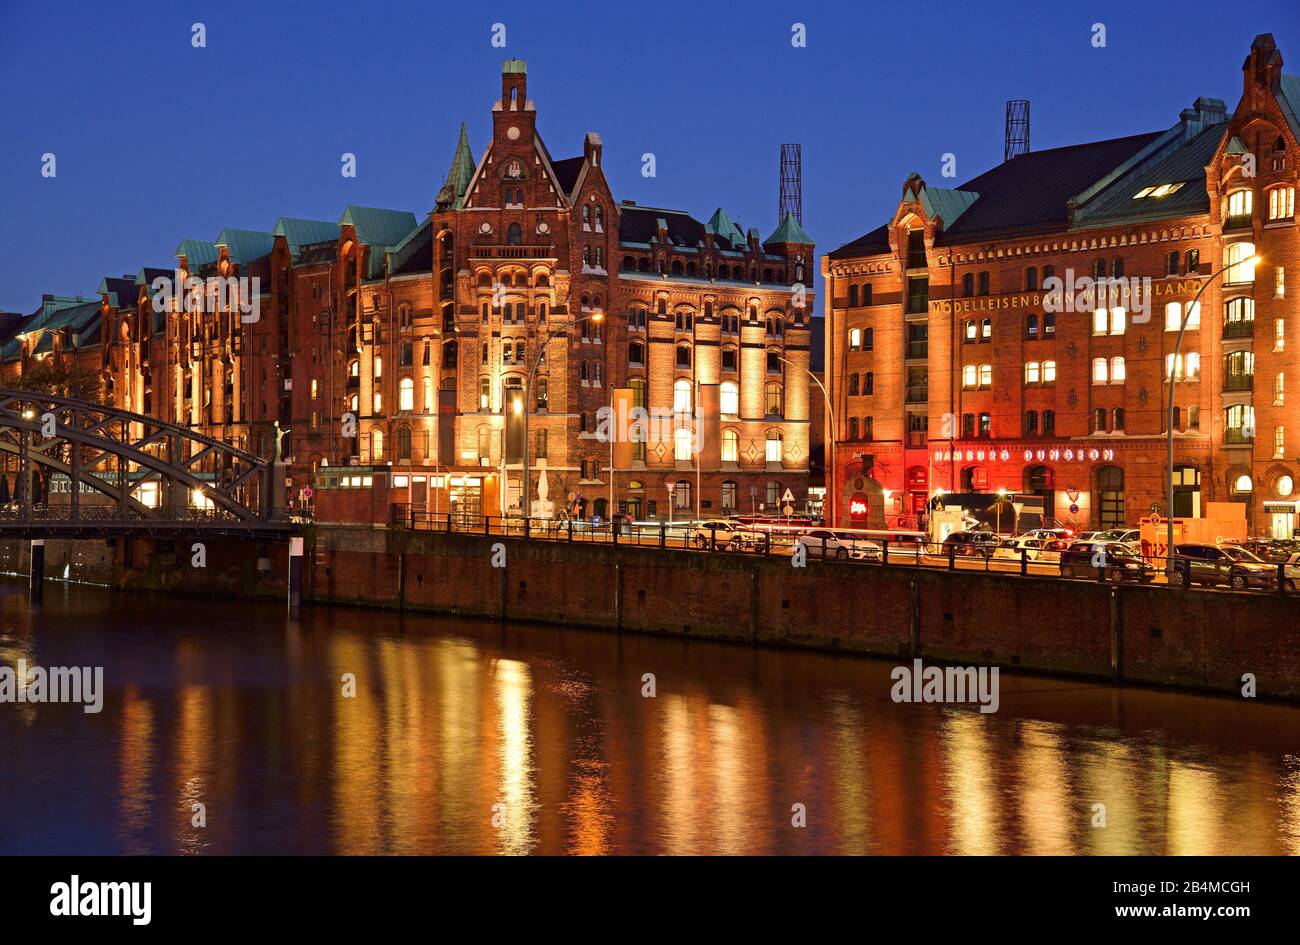 Europe, Germany, Hamburg, historic warehouse district, night, Hamburg dungeon, model railway Wunderland, Stock Photo